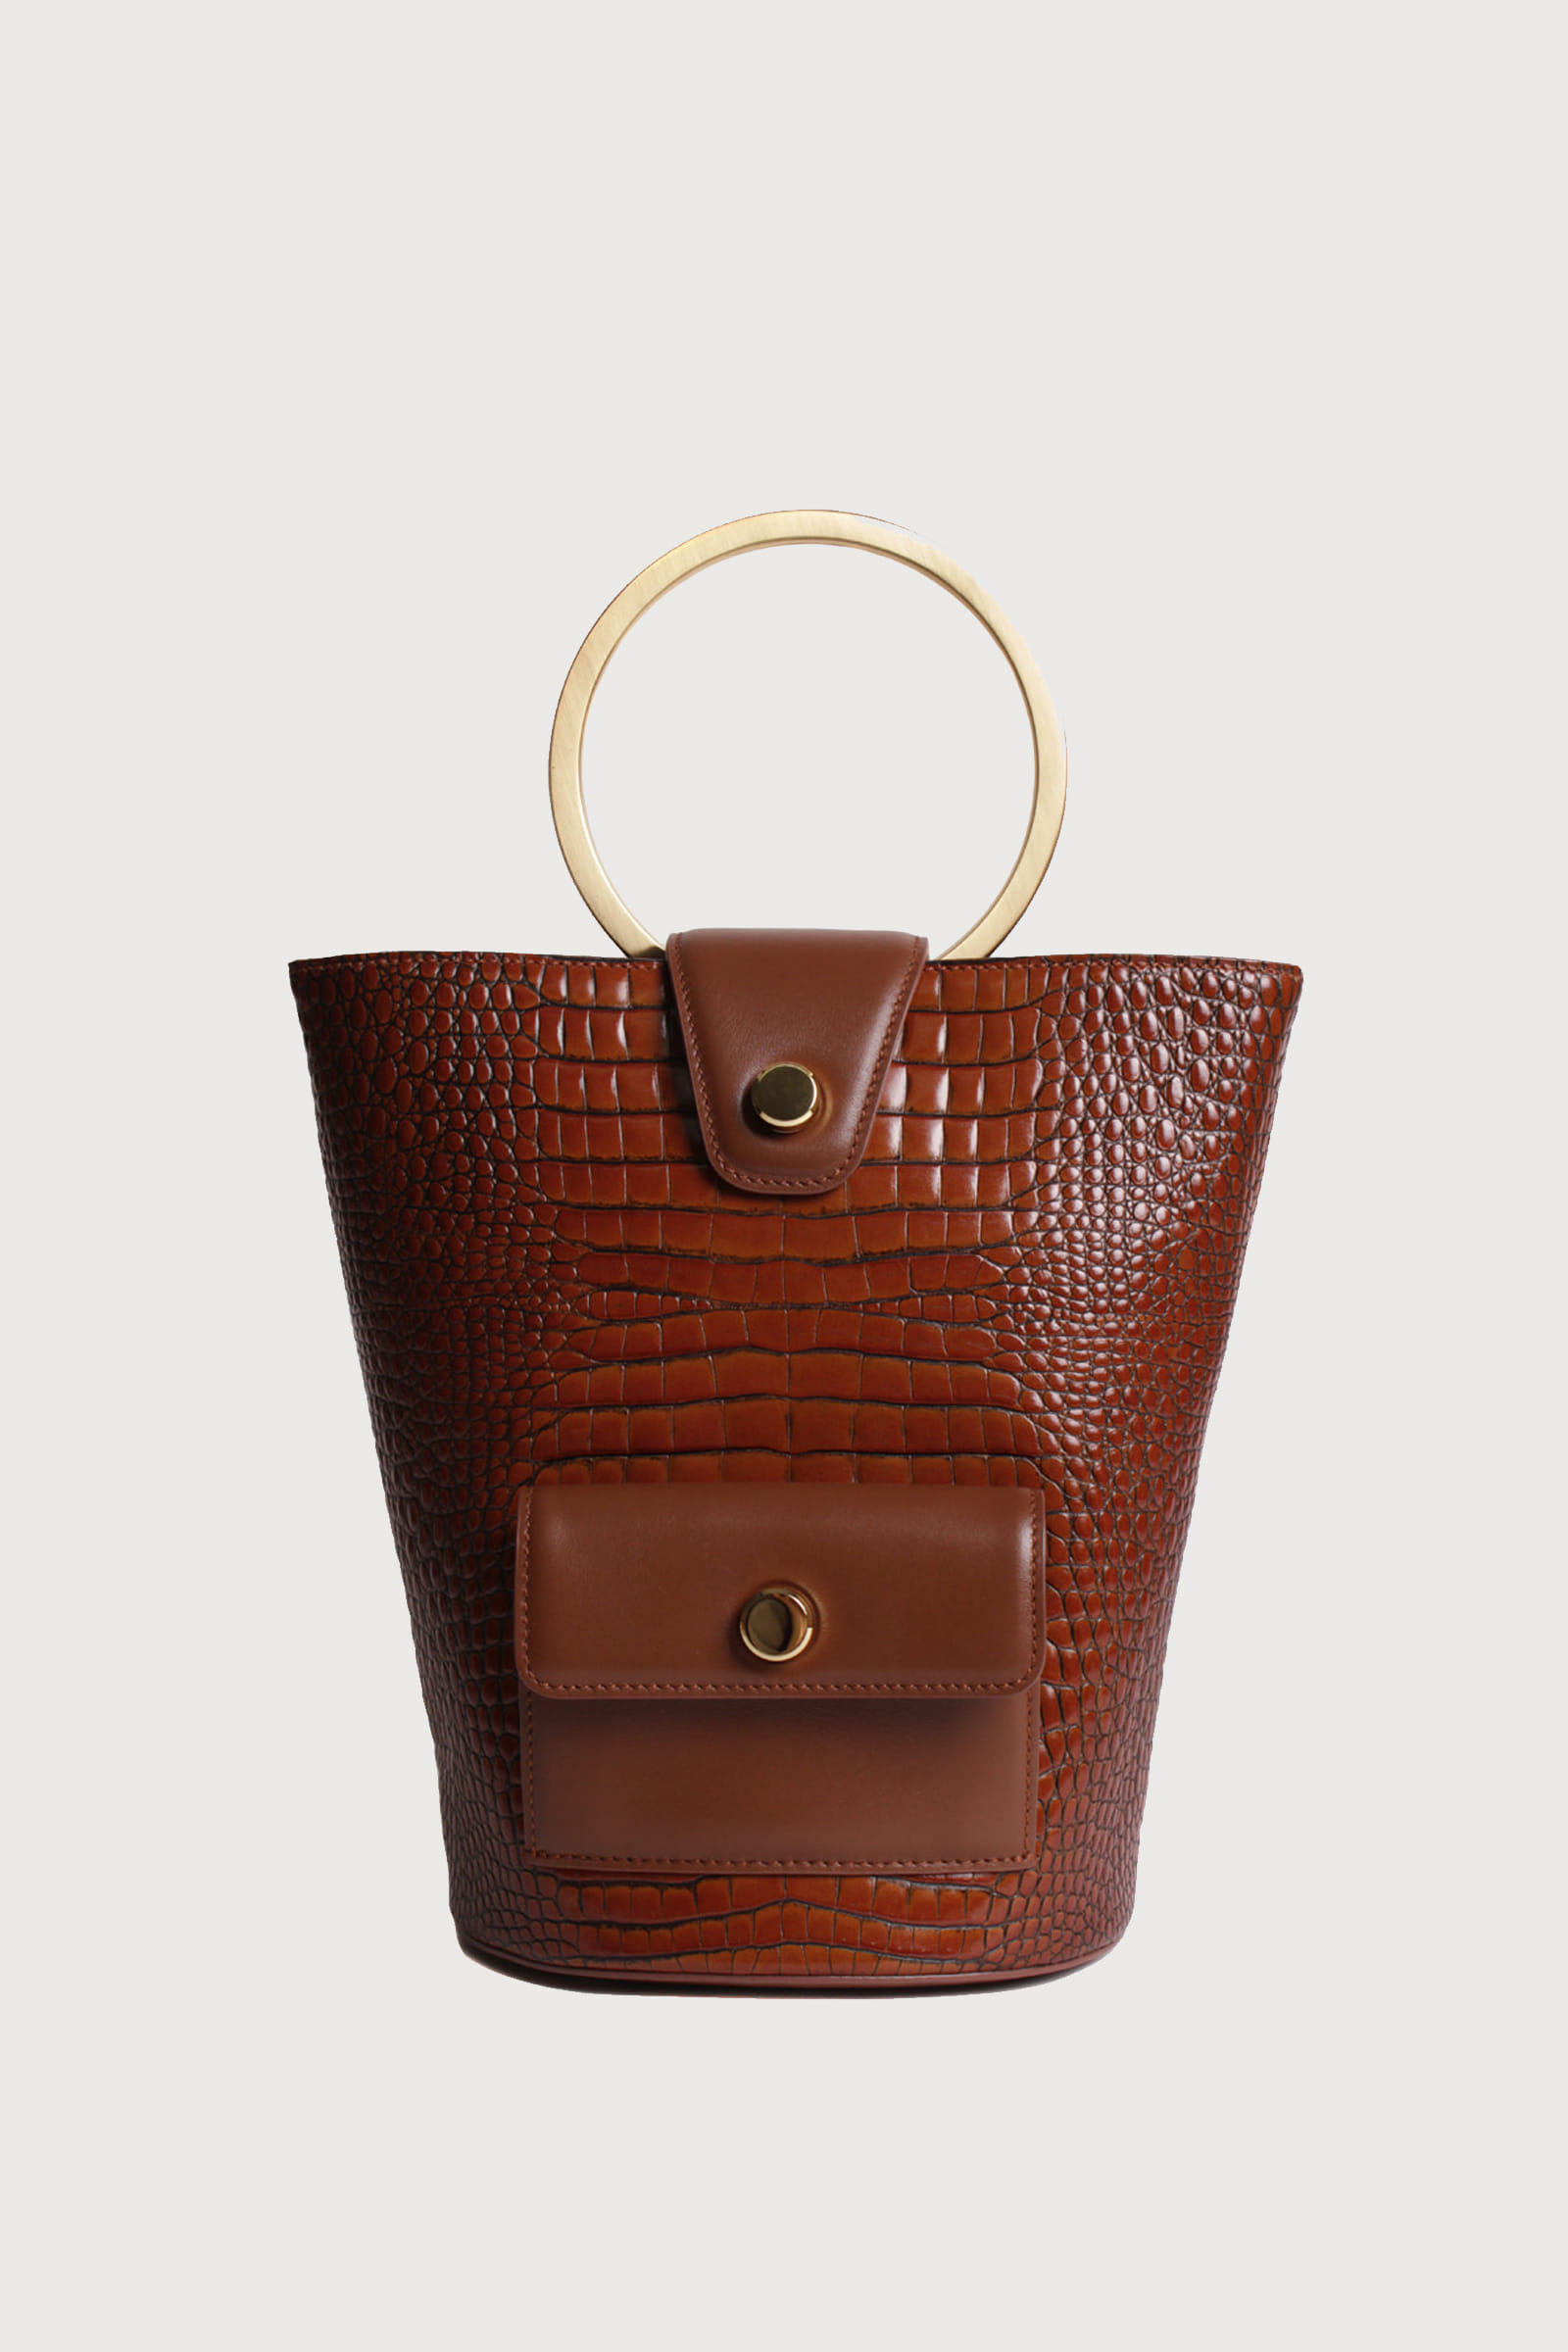 O-ring handle bag (croc brown)